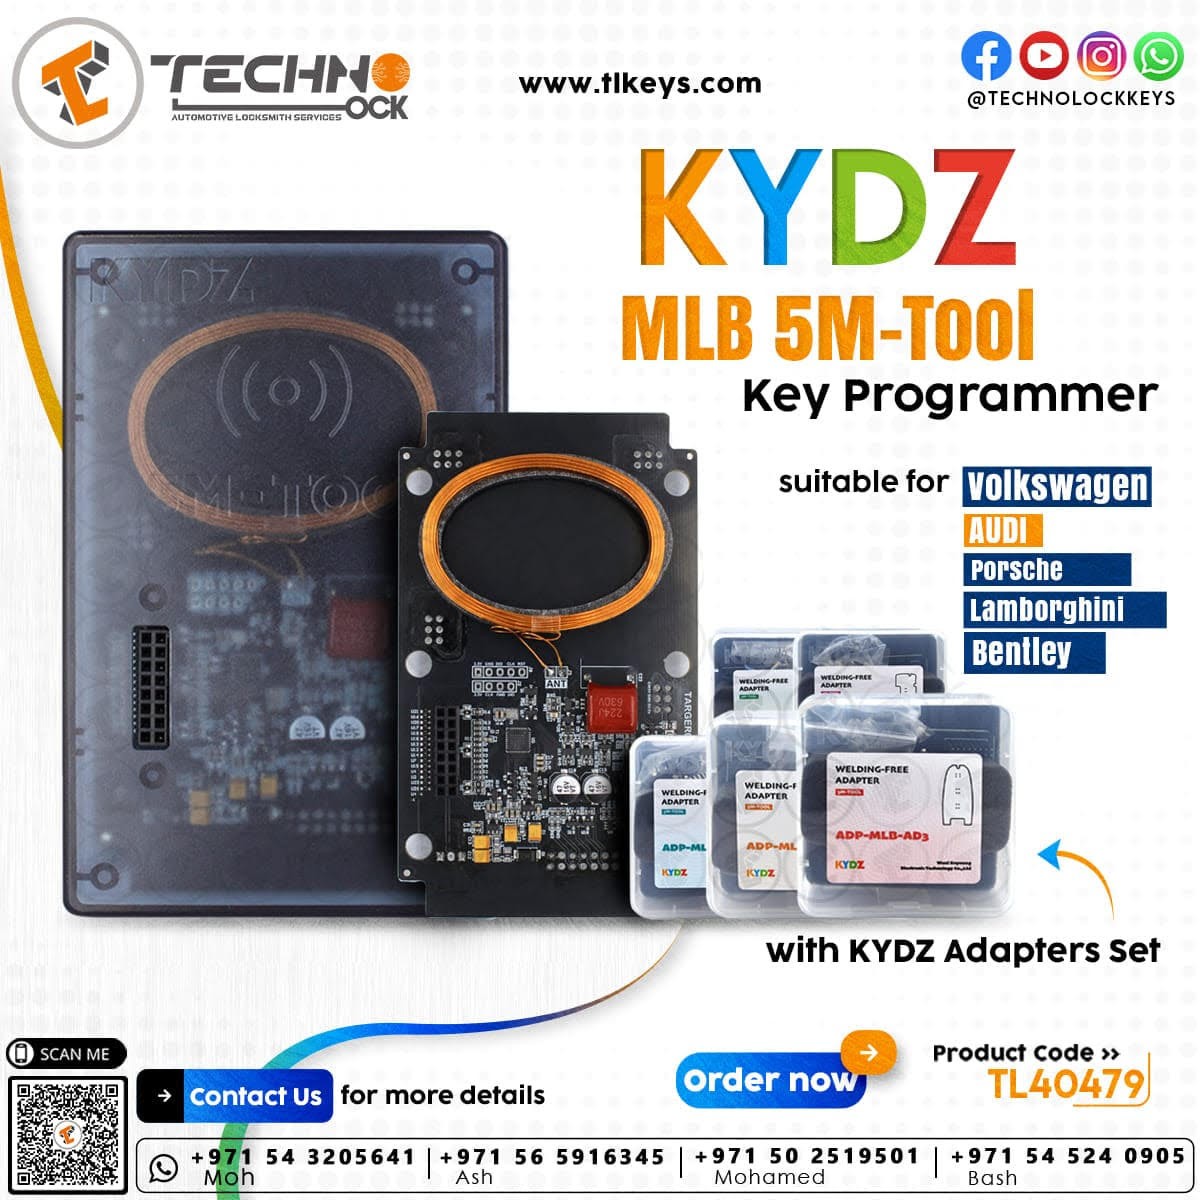 KYDZ MLB 5M-Tool Key Programmer with KYDZ Adapter Set